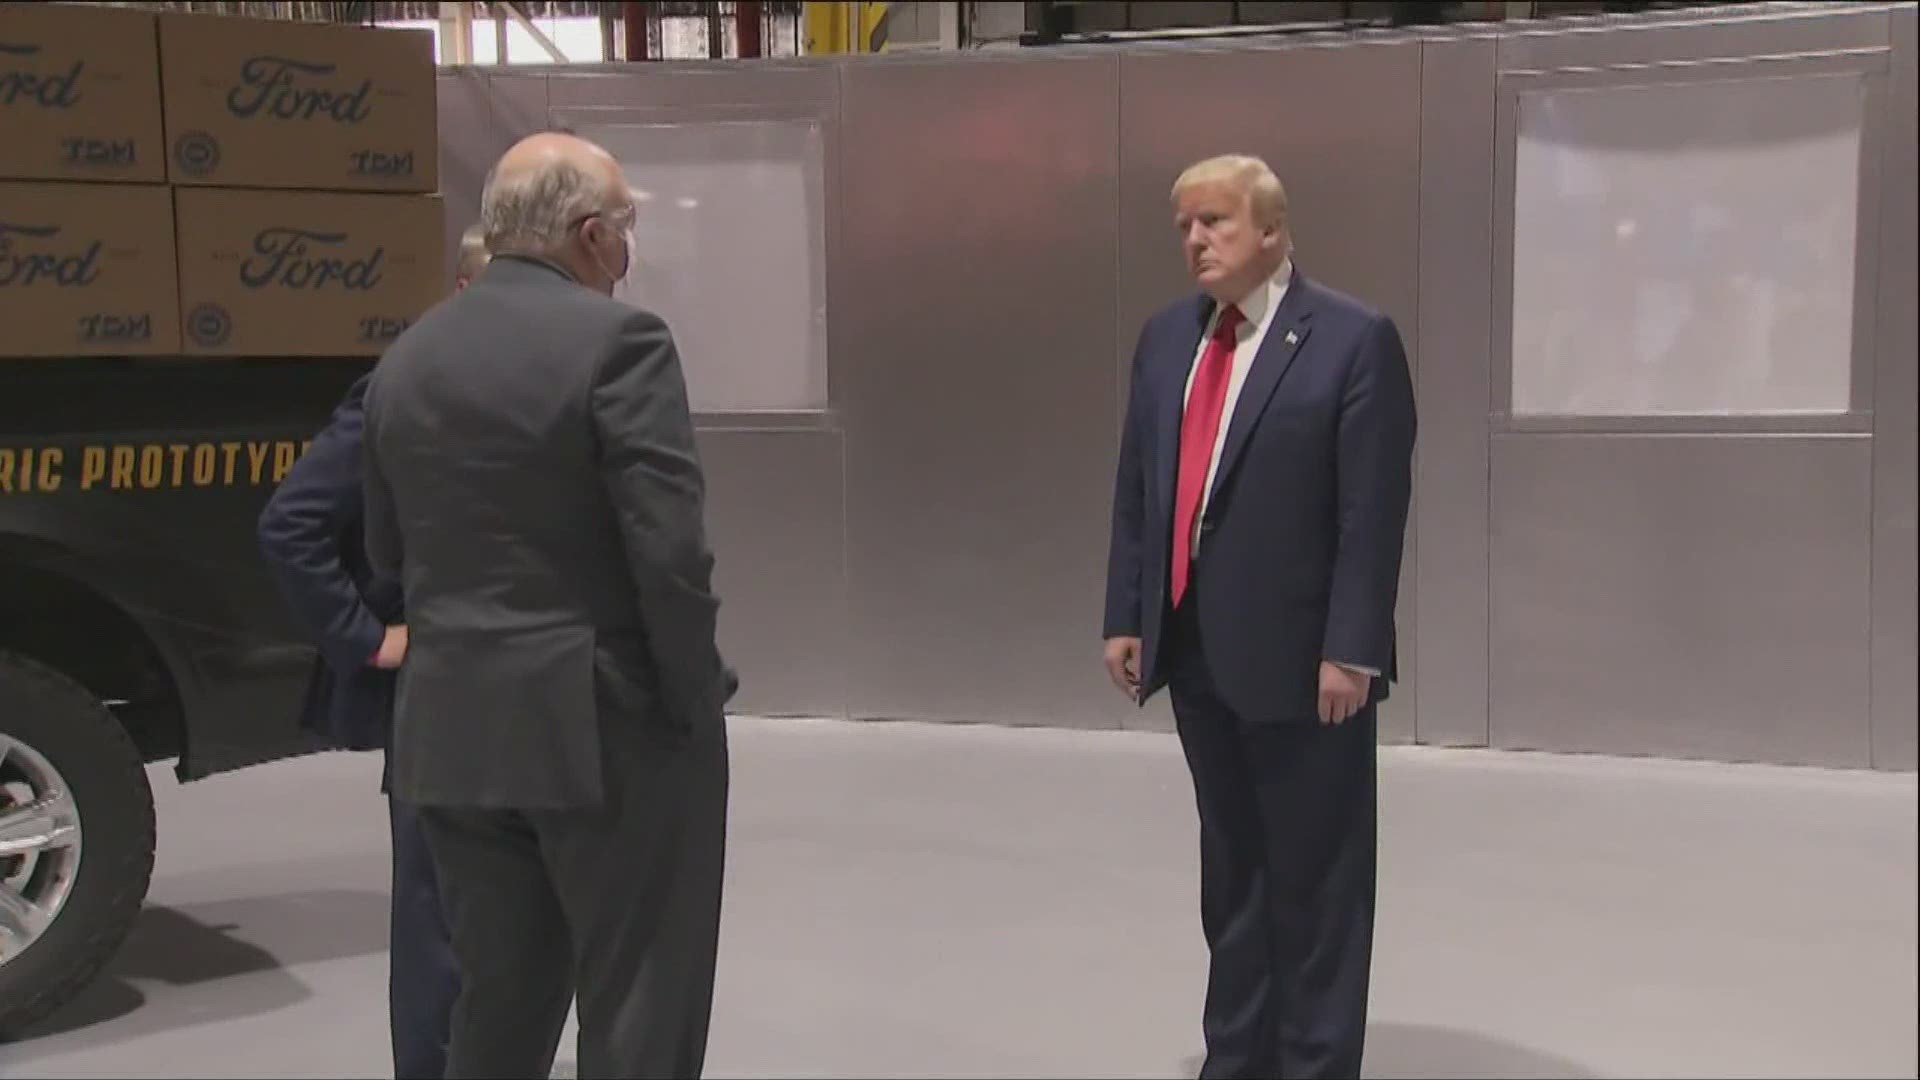 President Trump visited Michigan to tour Ypsilanti Ford Plant.